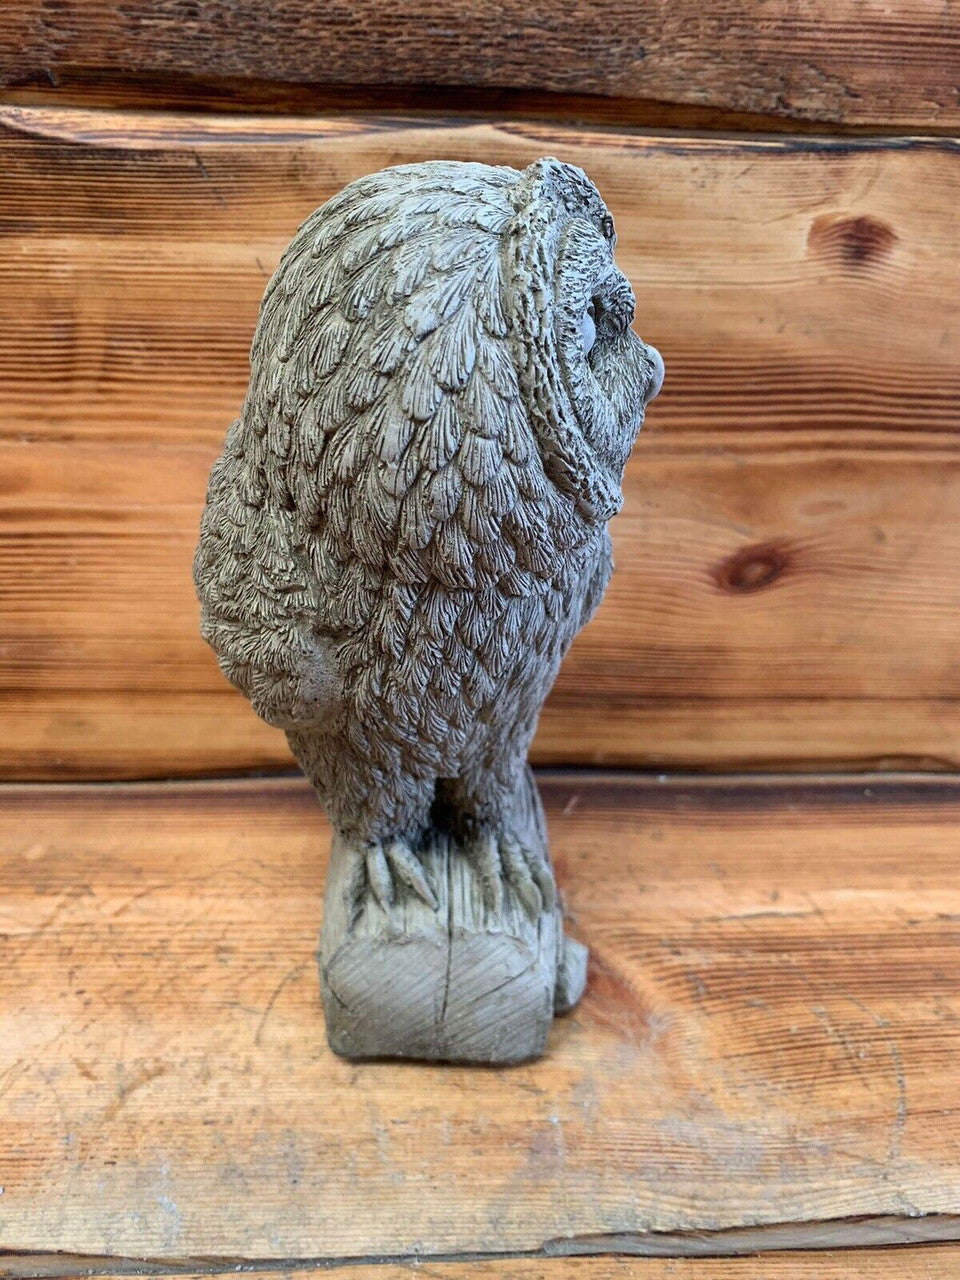 Owl on Log